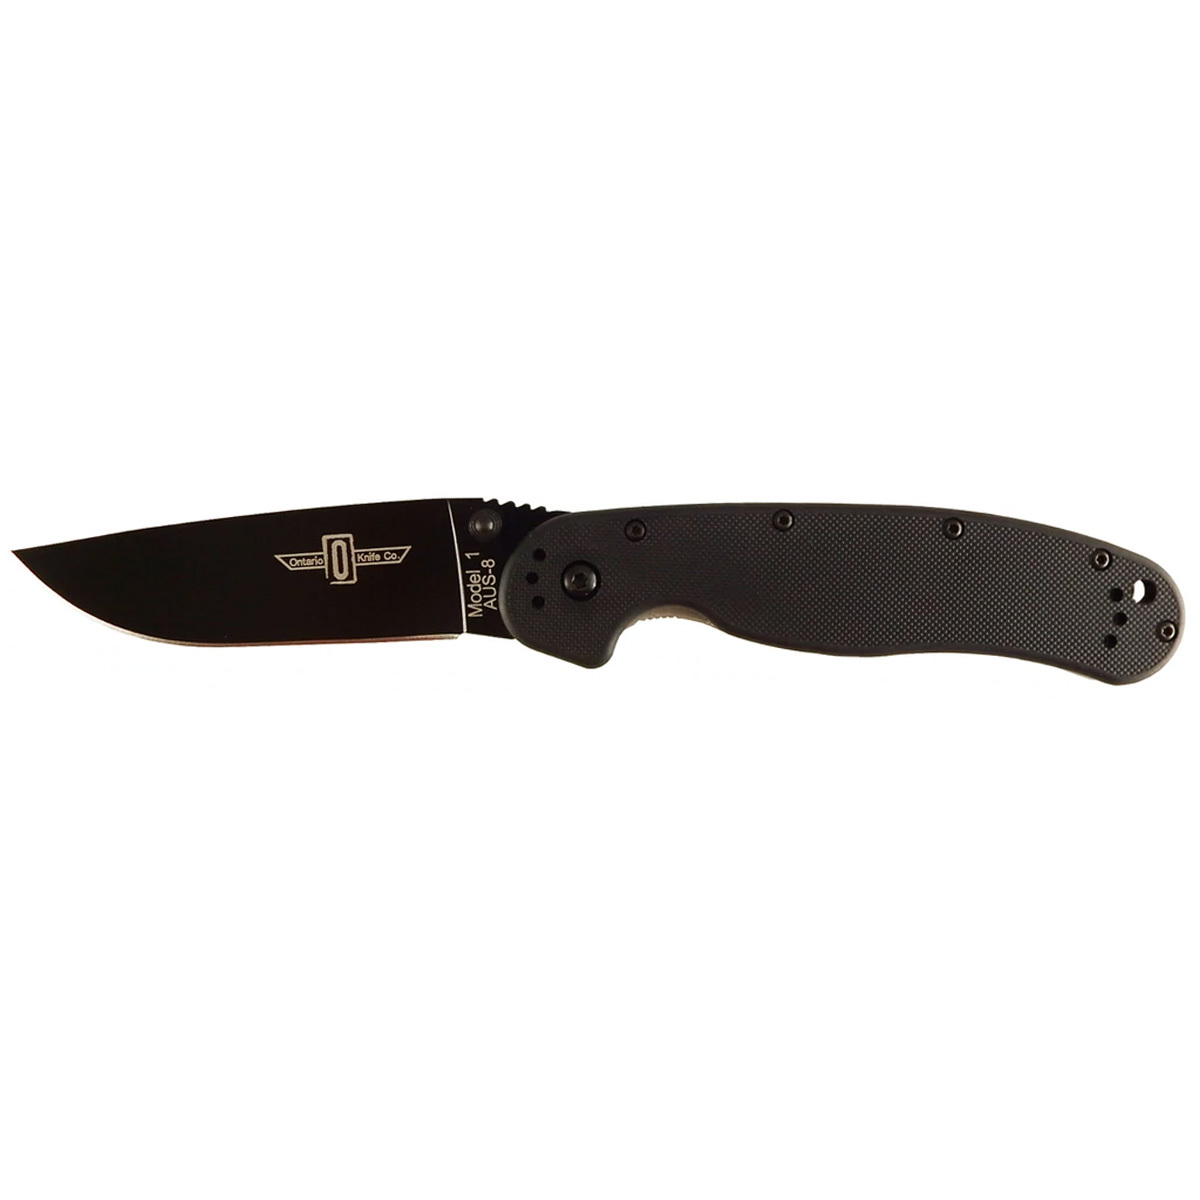 Нож Ontario 8846 RAT 1 Black складной нож ontario joe pardue utilitac ii black tanto blade highly textured handle